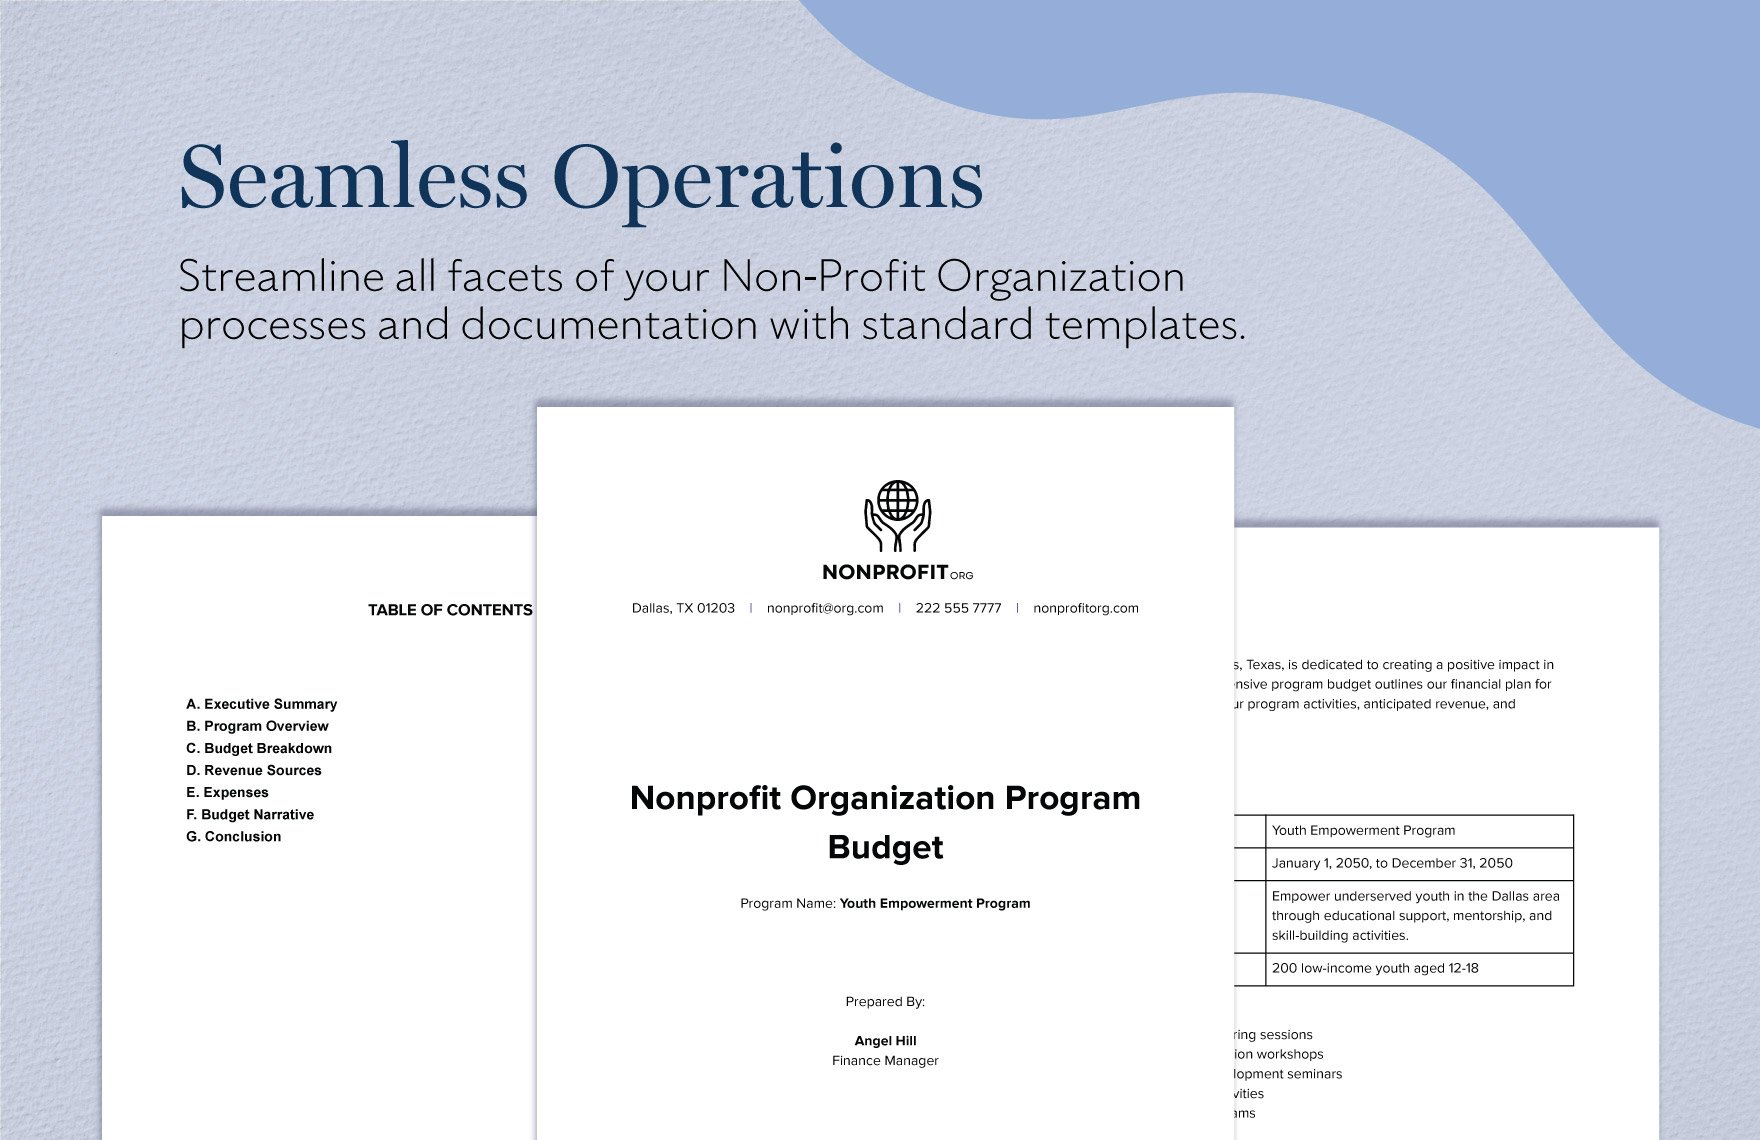 Nonprofit Organization Program Budget Template